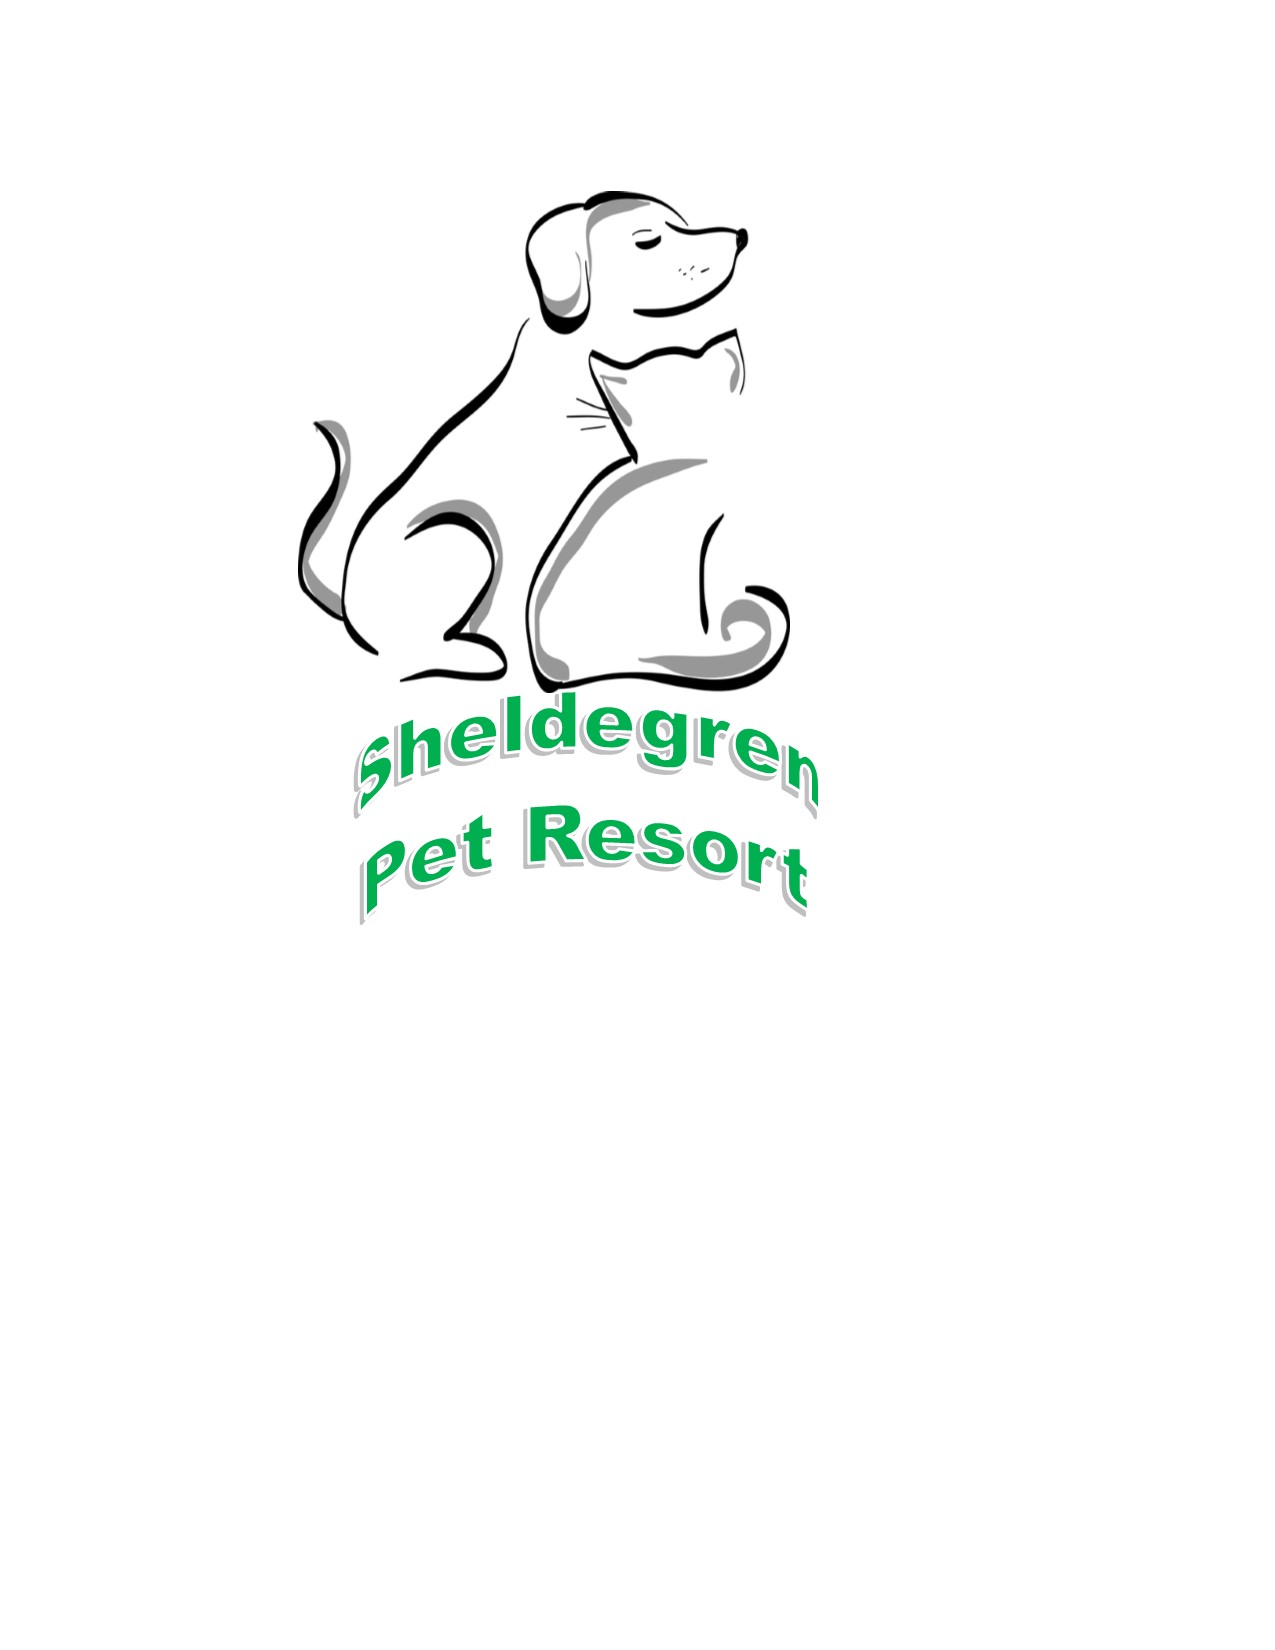 Sheldegren Pet Resort 